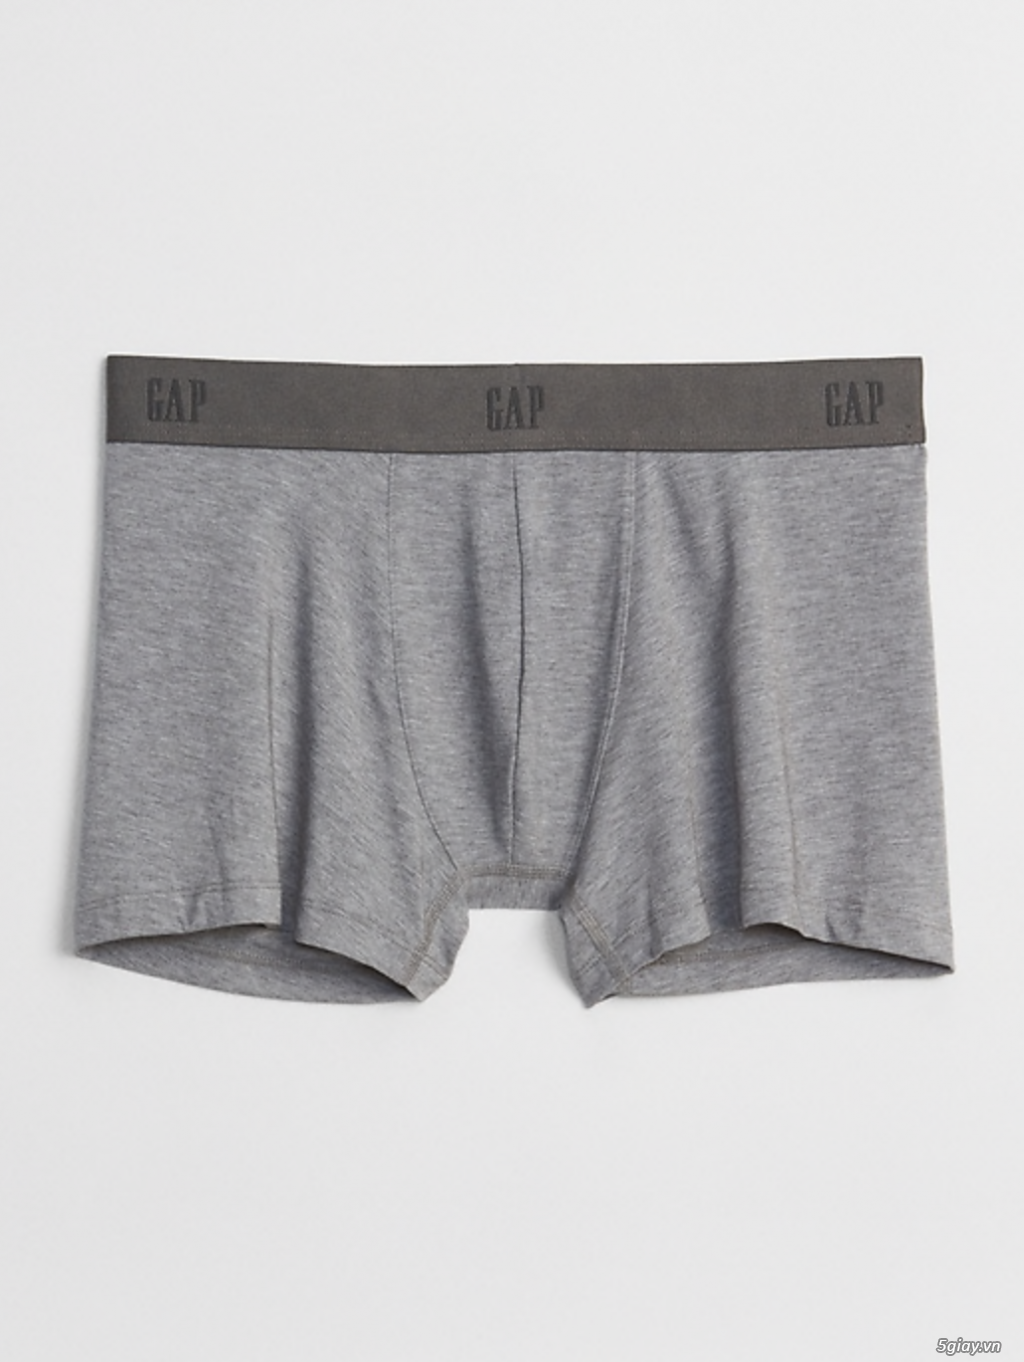 Underwear GAP, Boxers H&M, Giày Reebok Floatride 6000 - 12